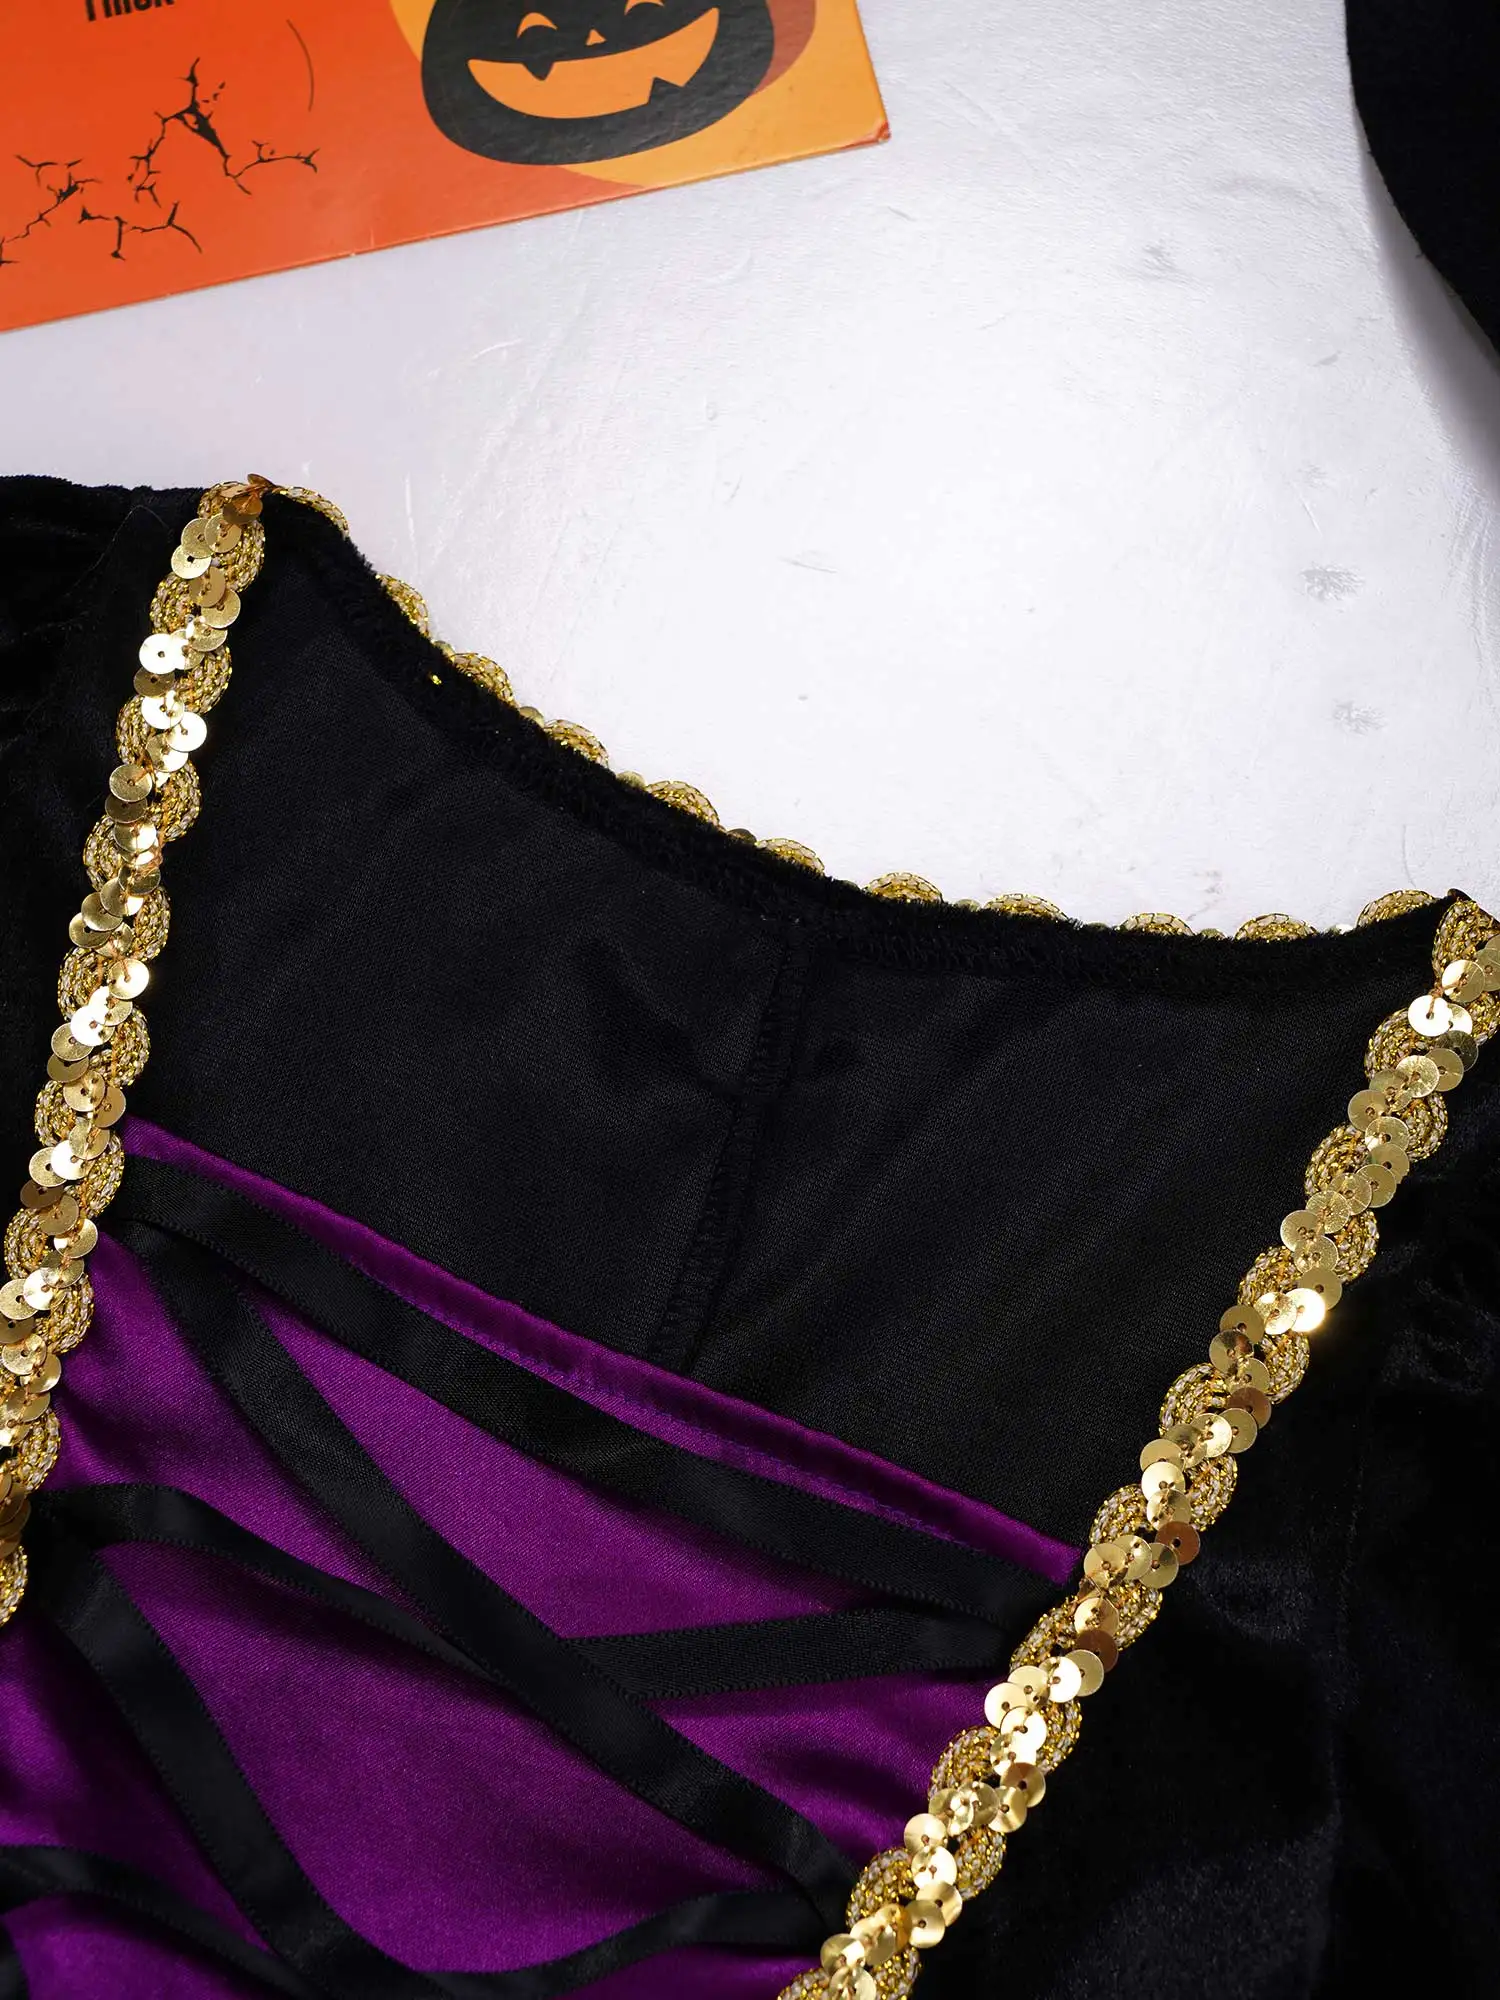 Costume Gótico, Glittery Mesh Tutu, Purim Hat, Festa de Carnaval, Halloween